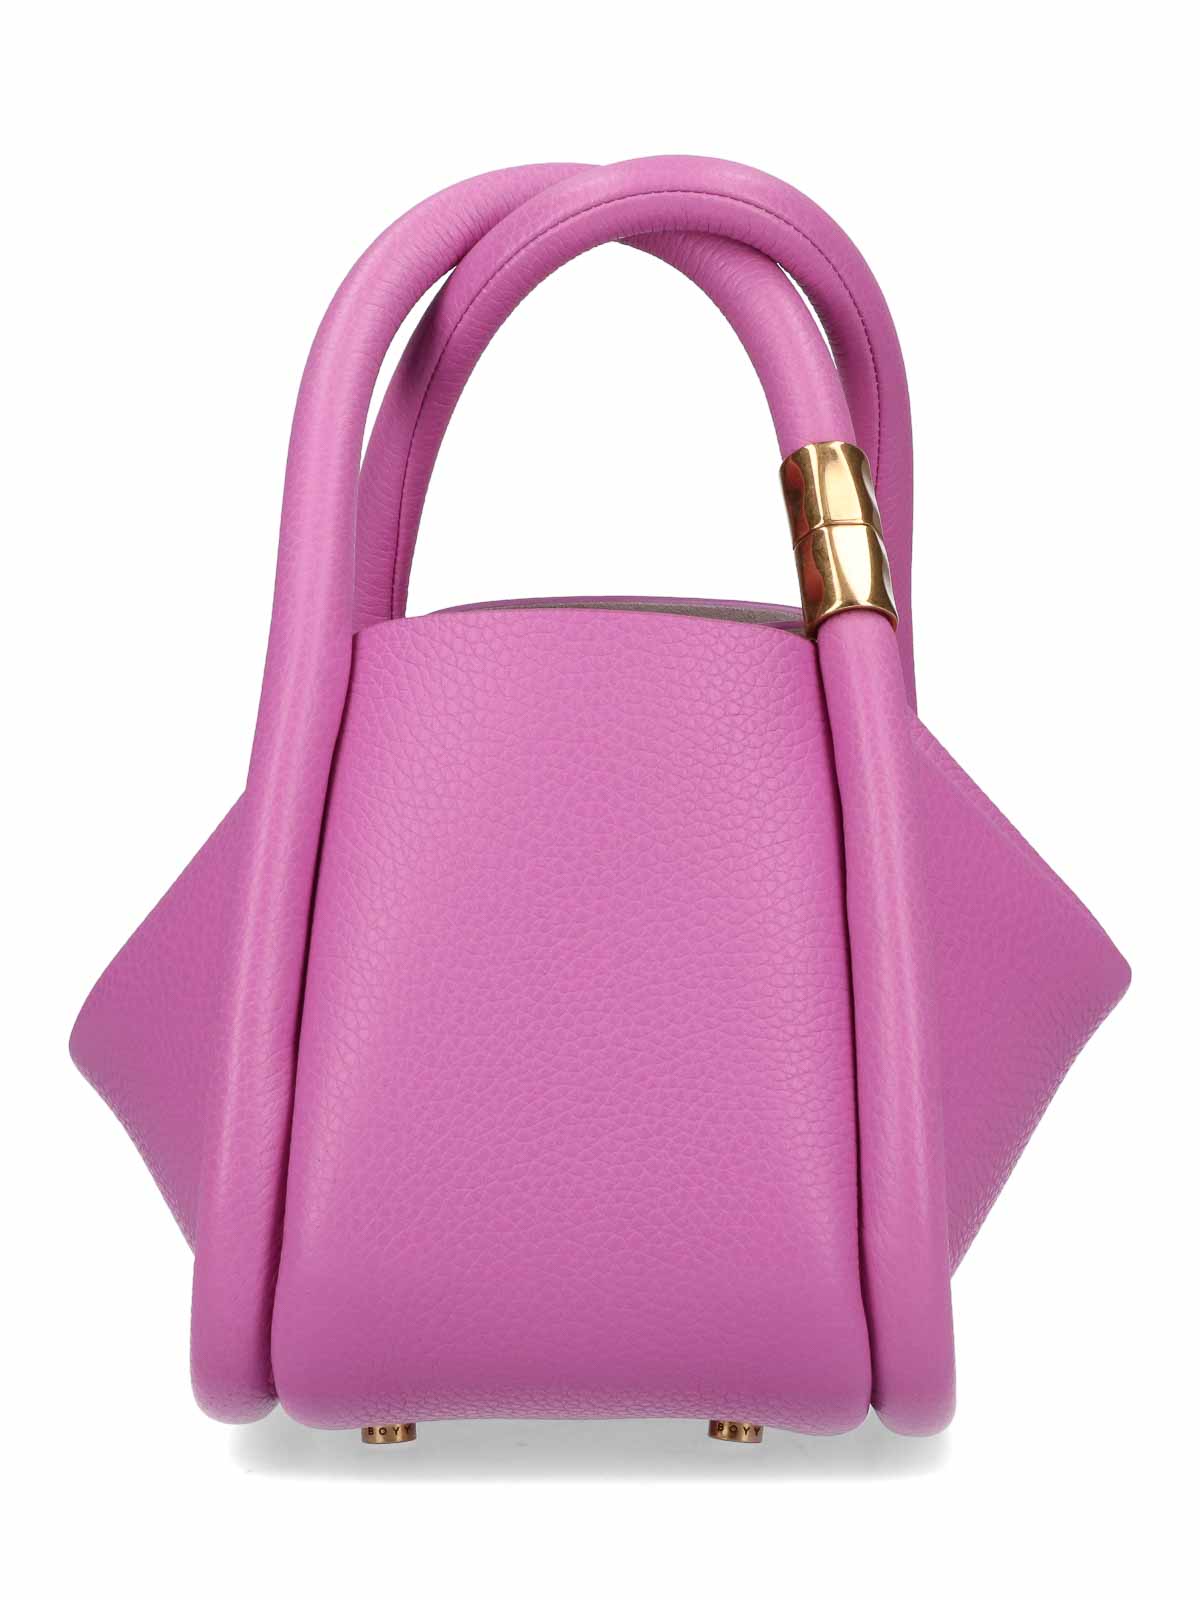 BOYY, Pink Women's Handbag